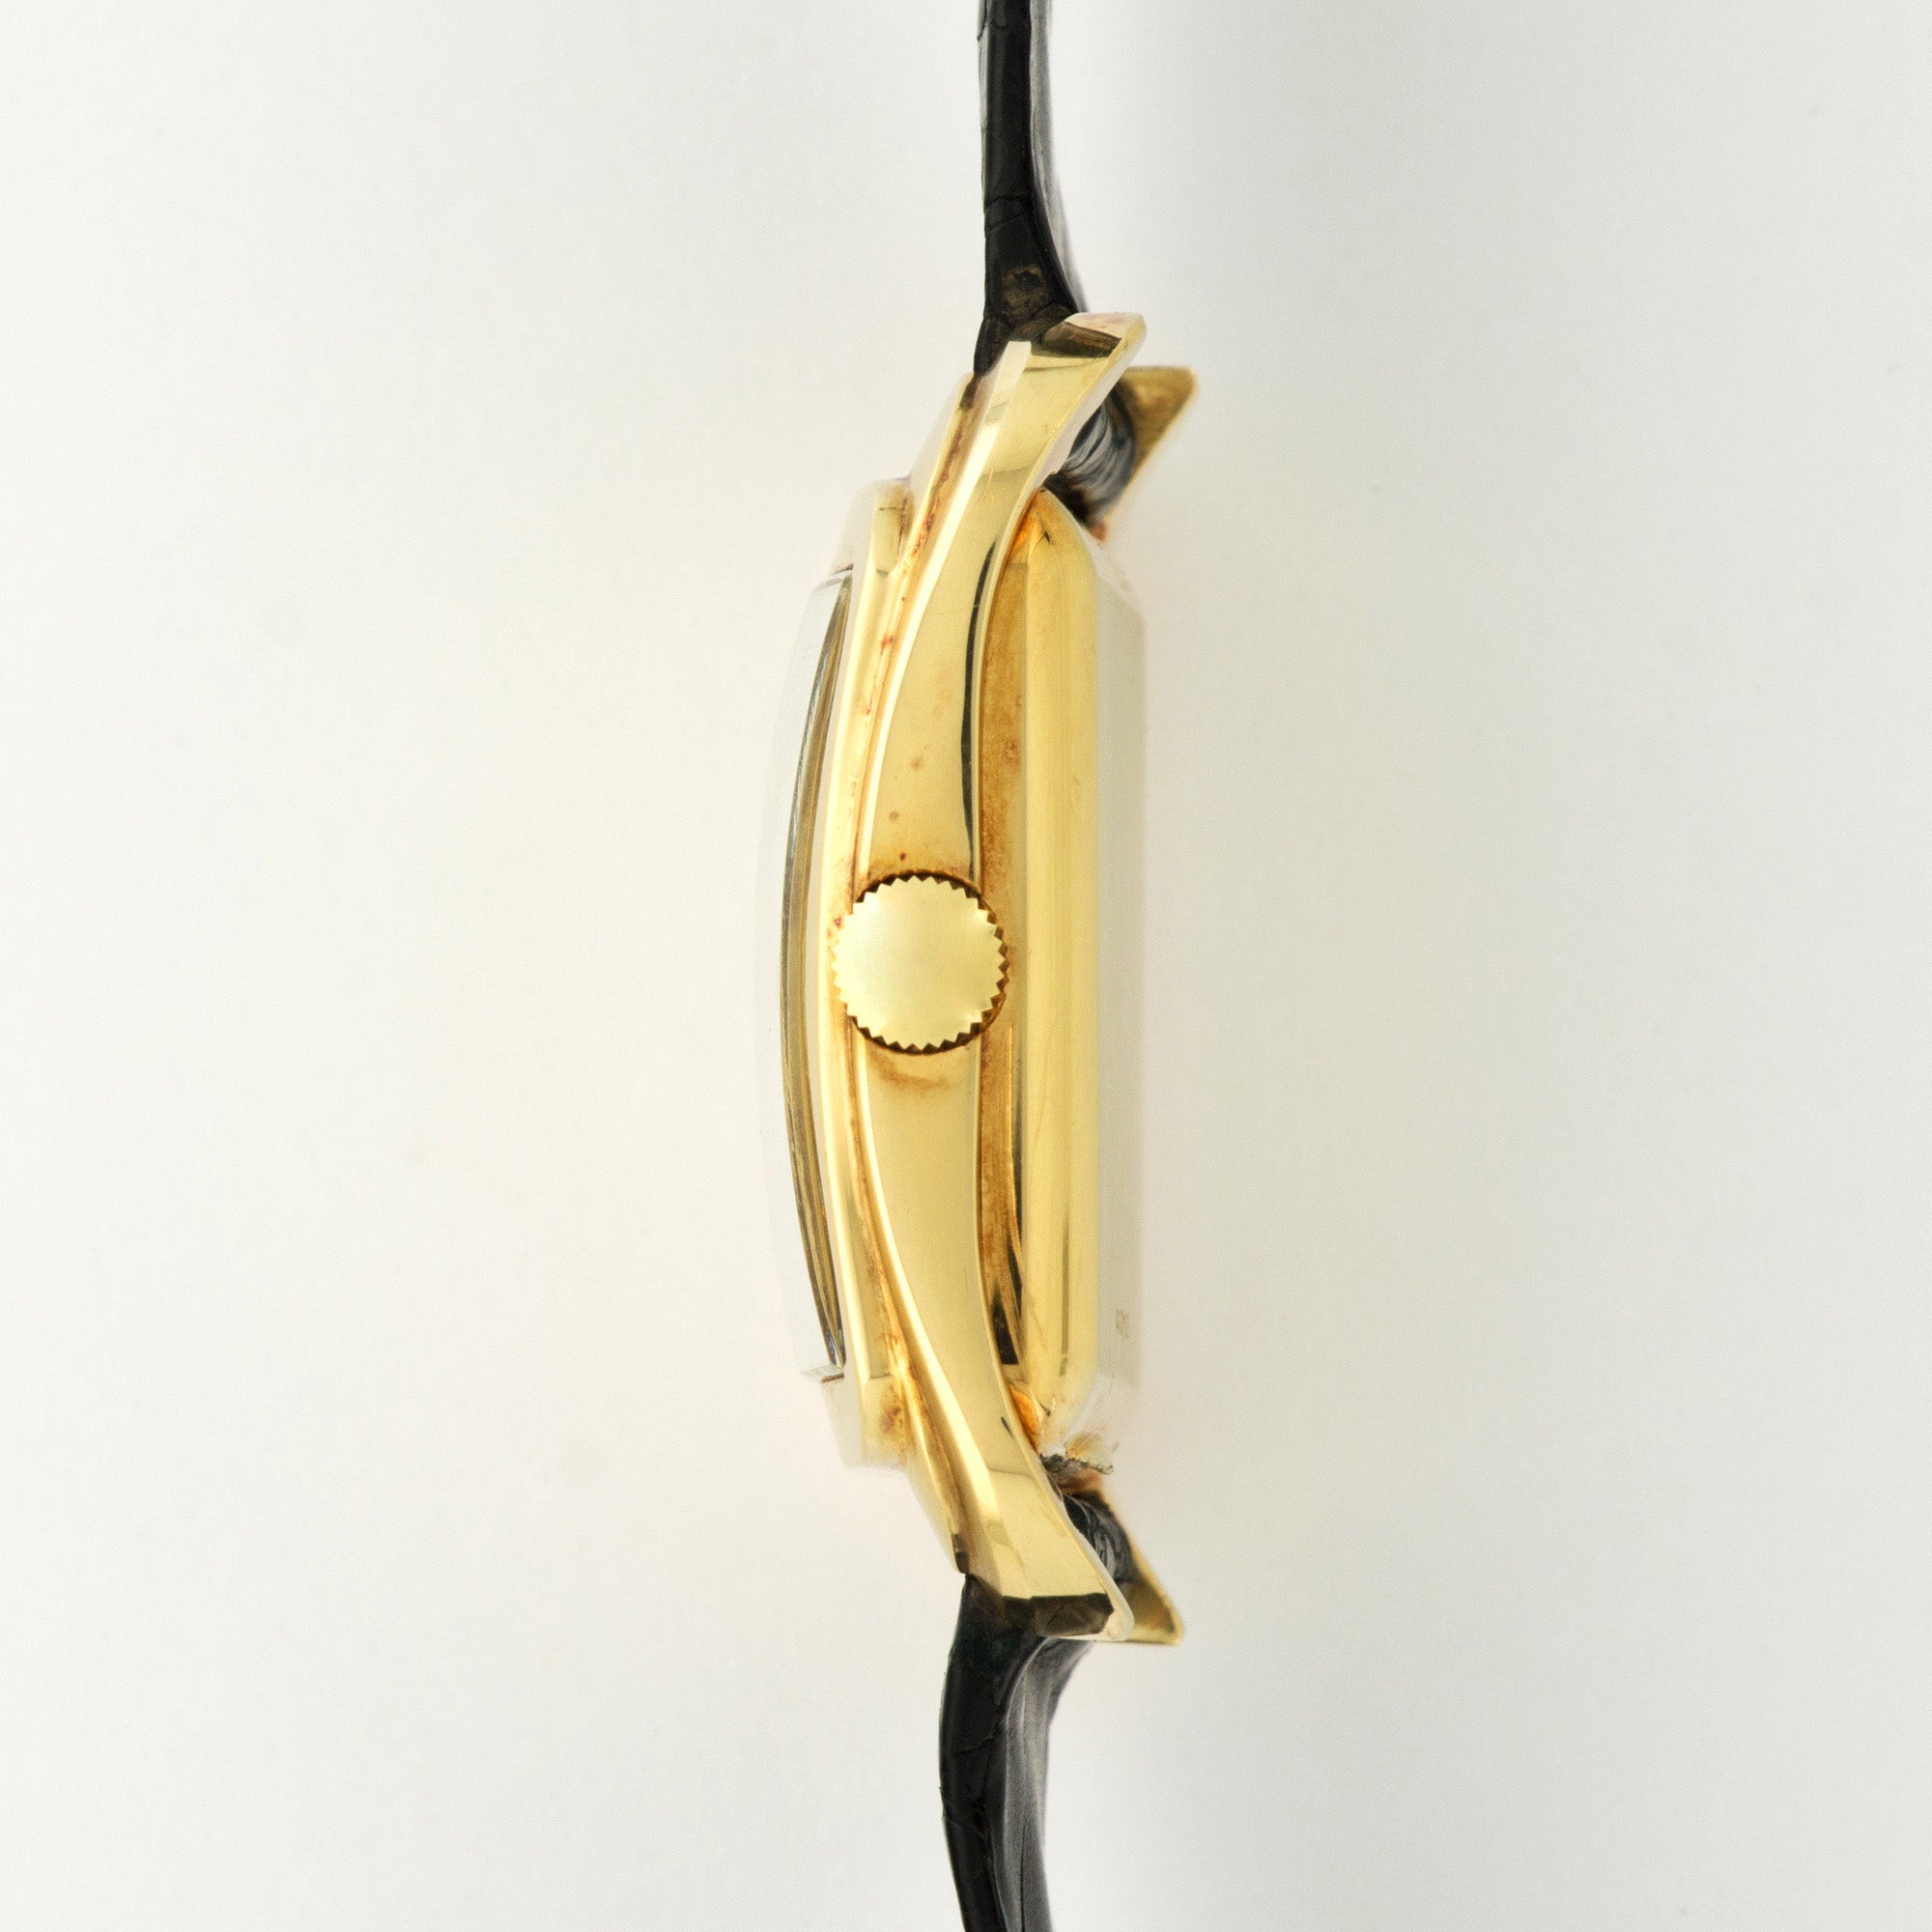 Vacheron Constantin - Vacheron Constantin Yellow Gold Cioccolatone Watch Ref. 6440 - The Keystone Watches